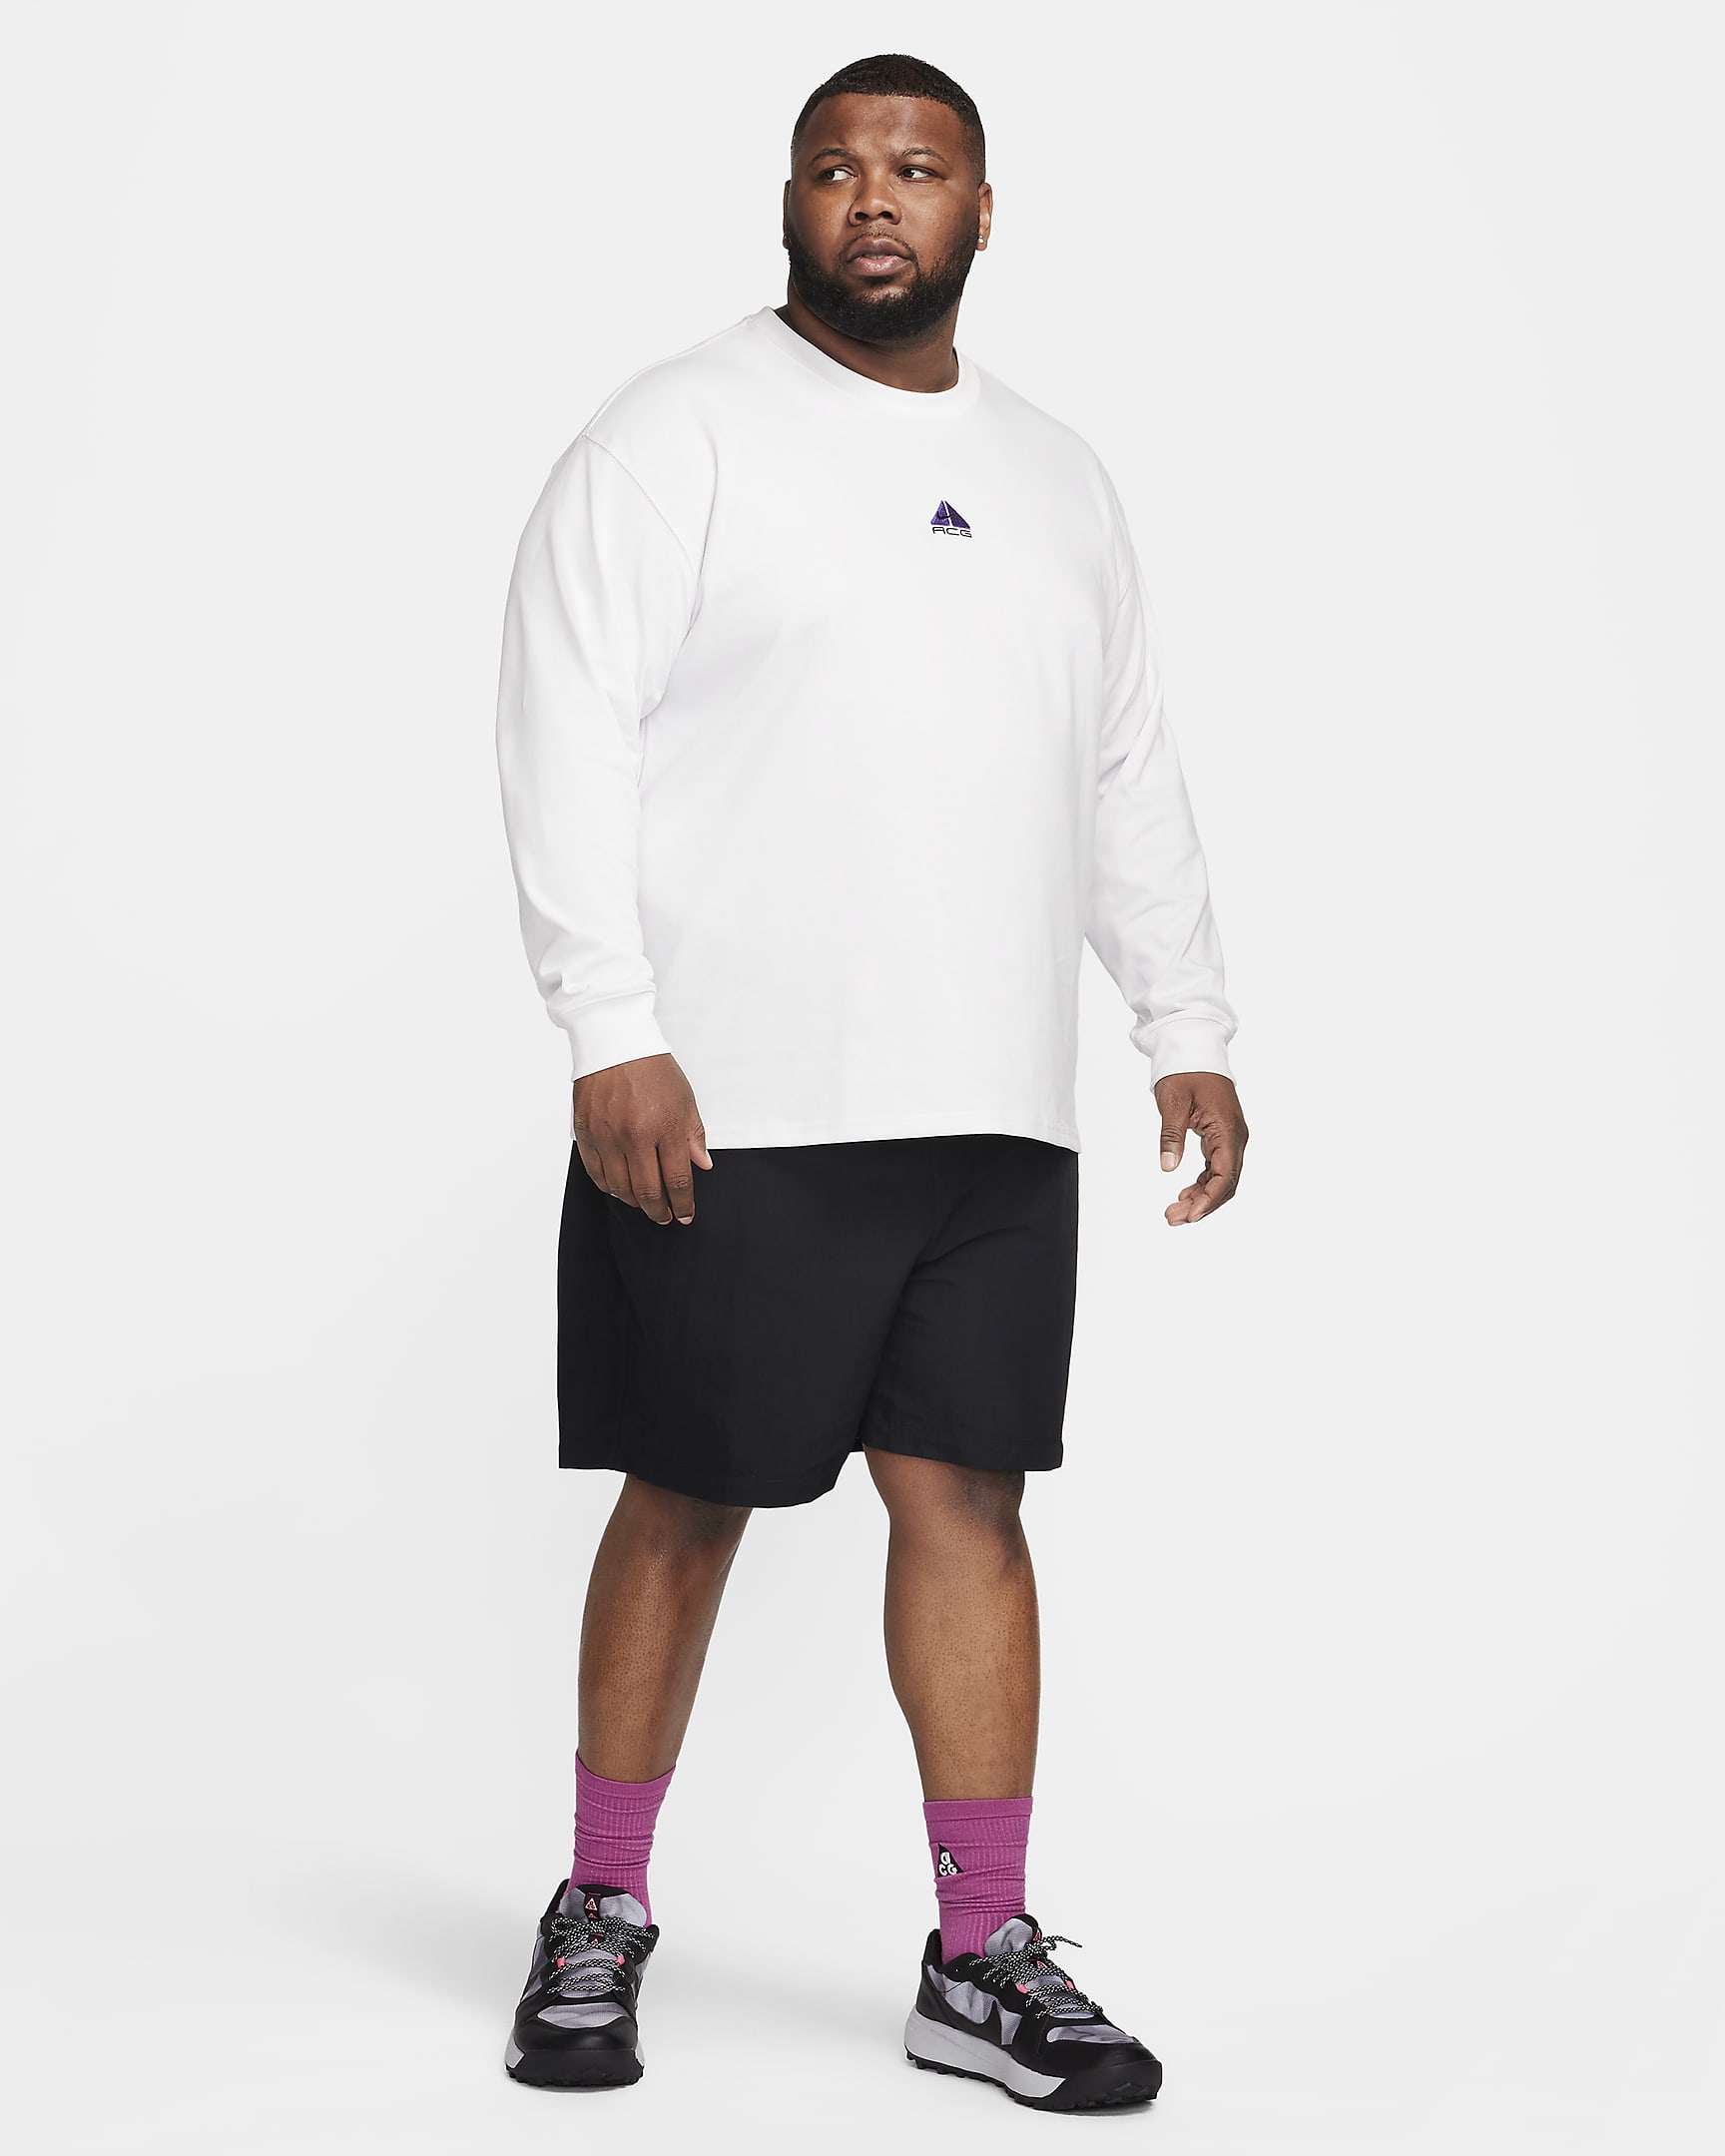 Nike ACG 'Lungs' Men's Long-Sleeve T-Shirt - Summit White/Black